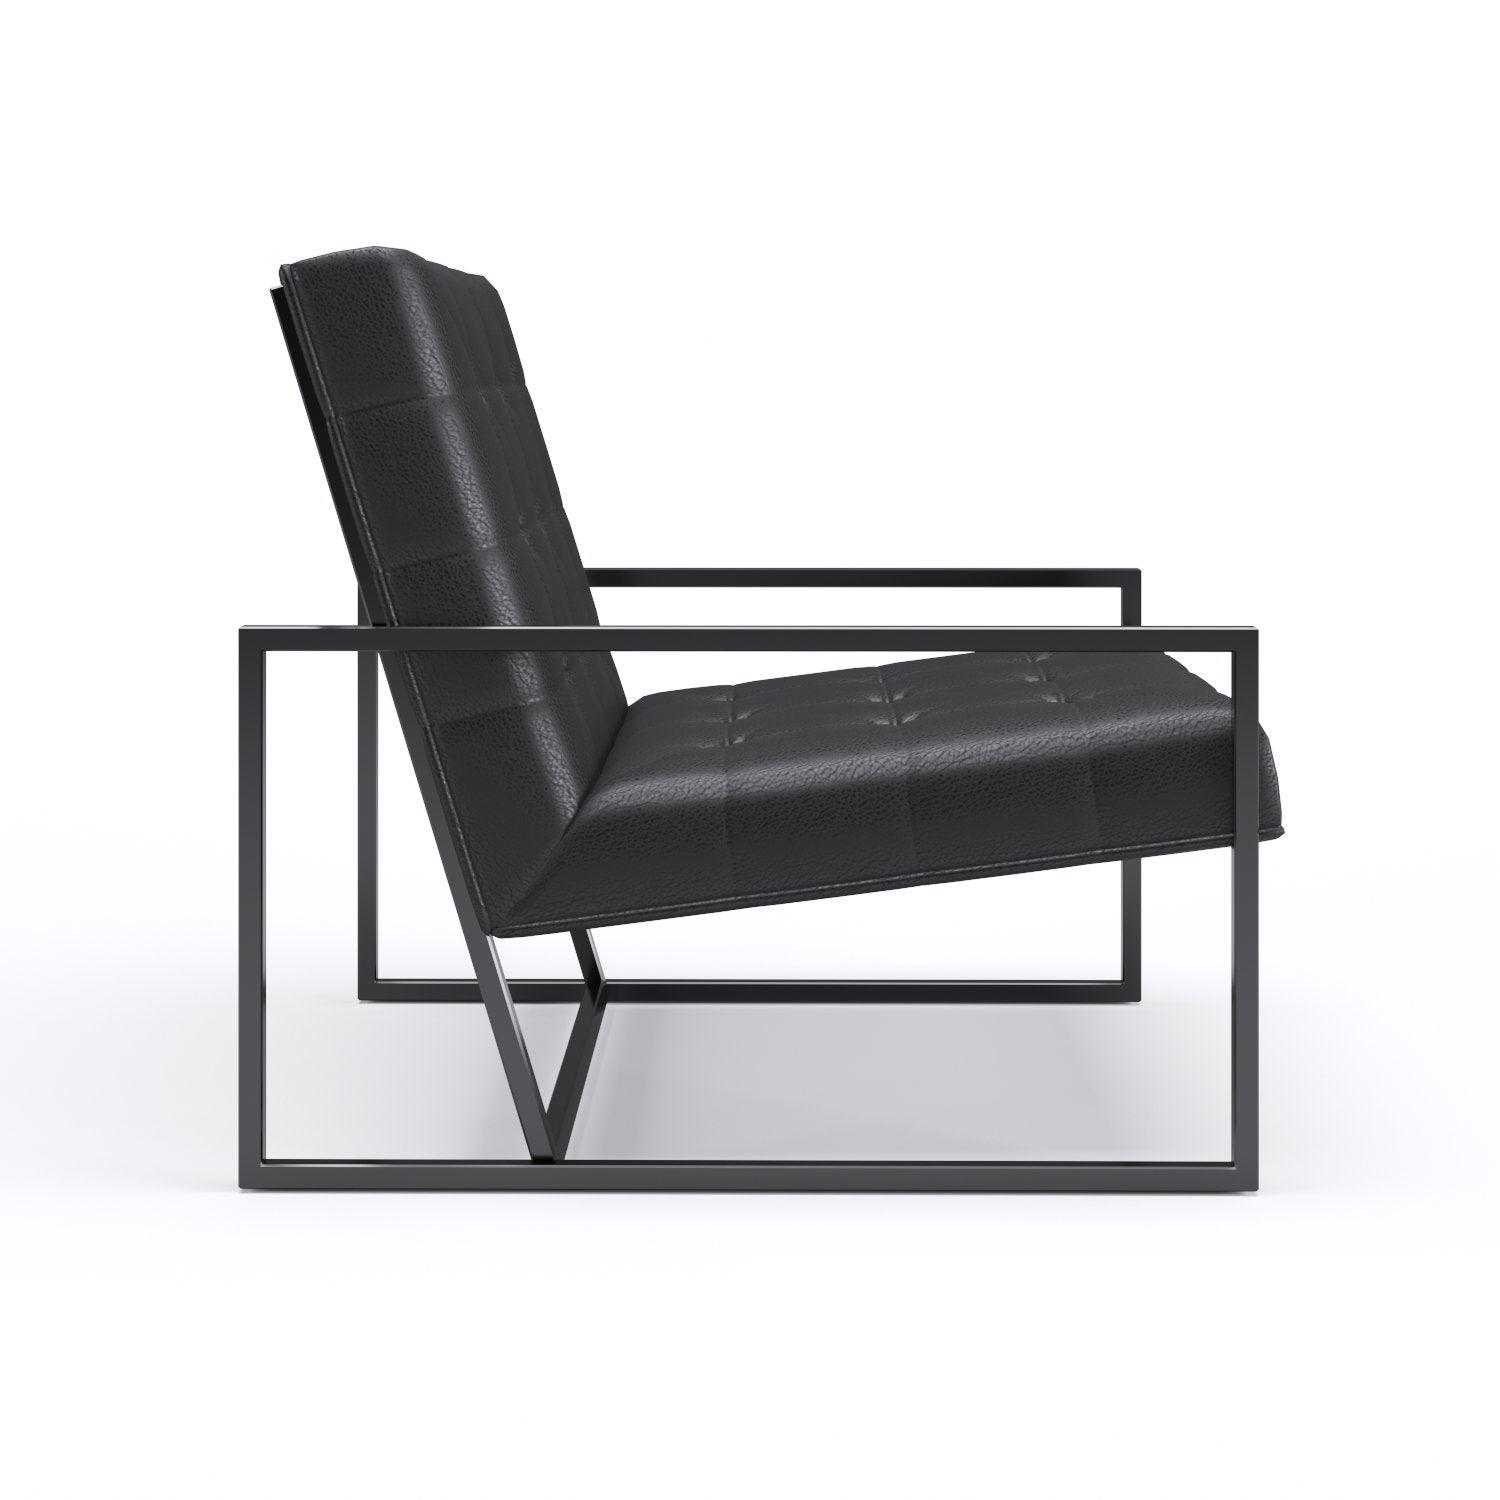 Copenhagen Leather Loft chair - INTERIORTONIC